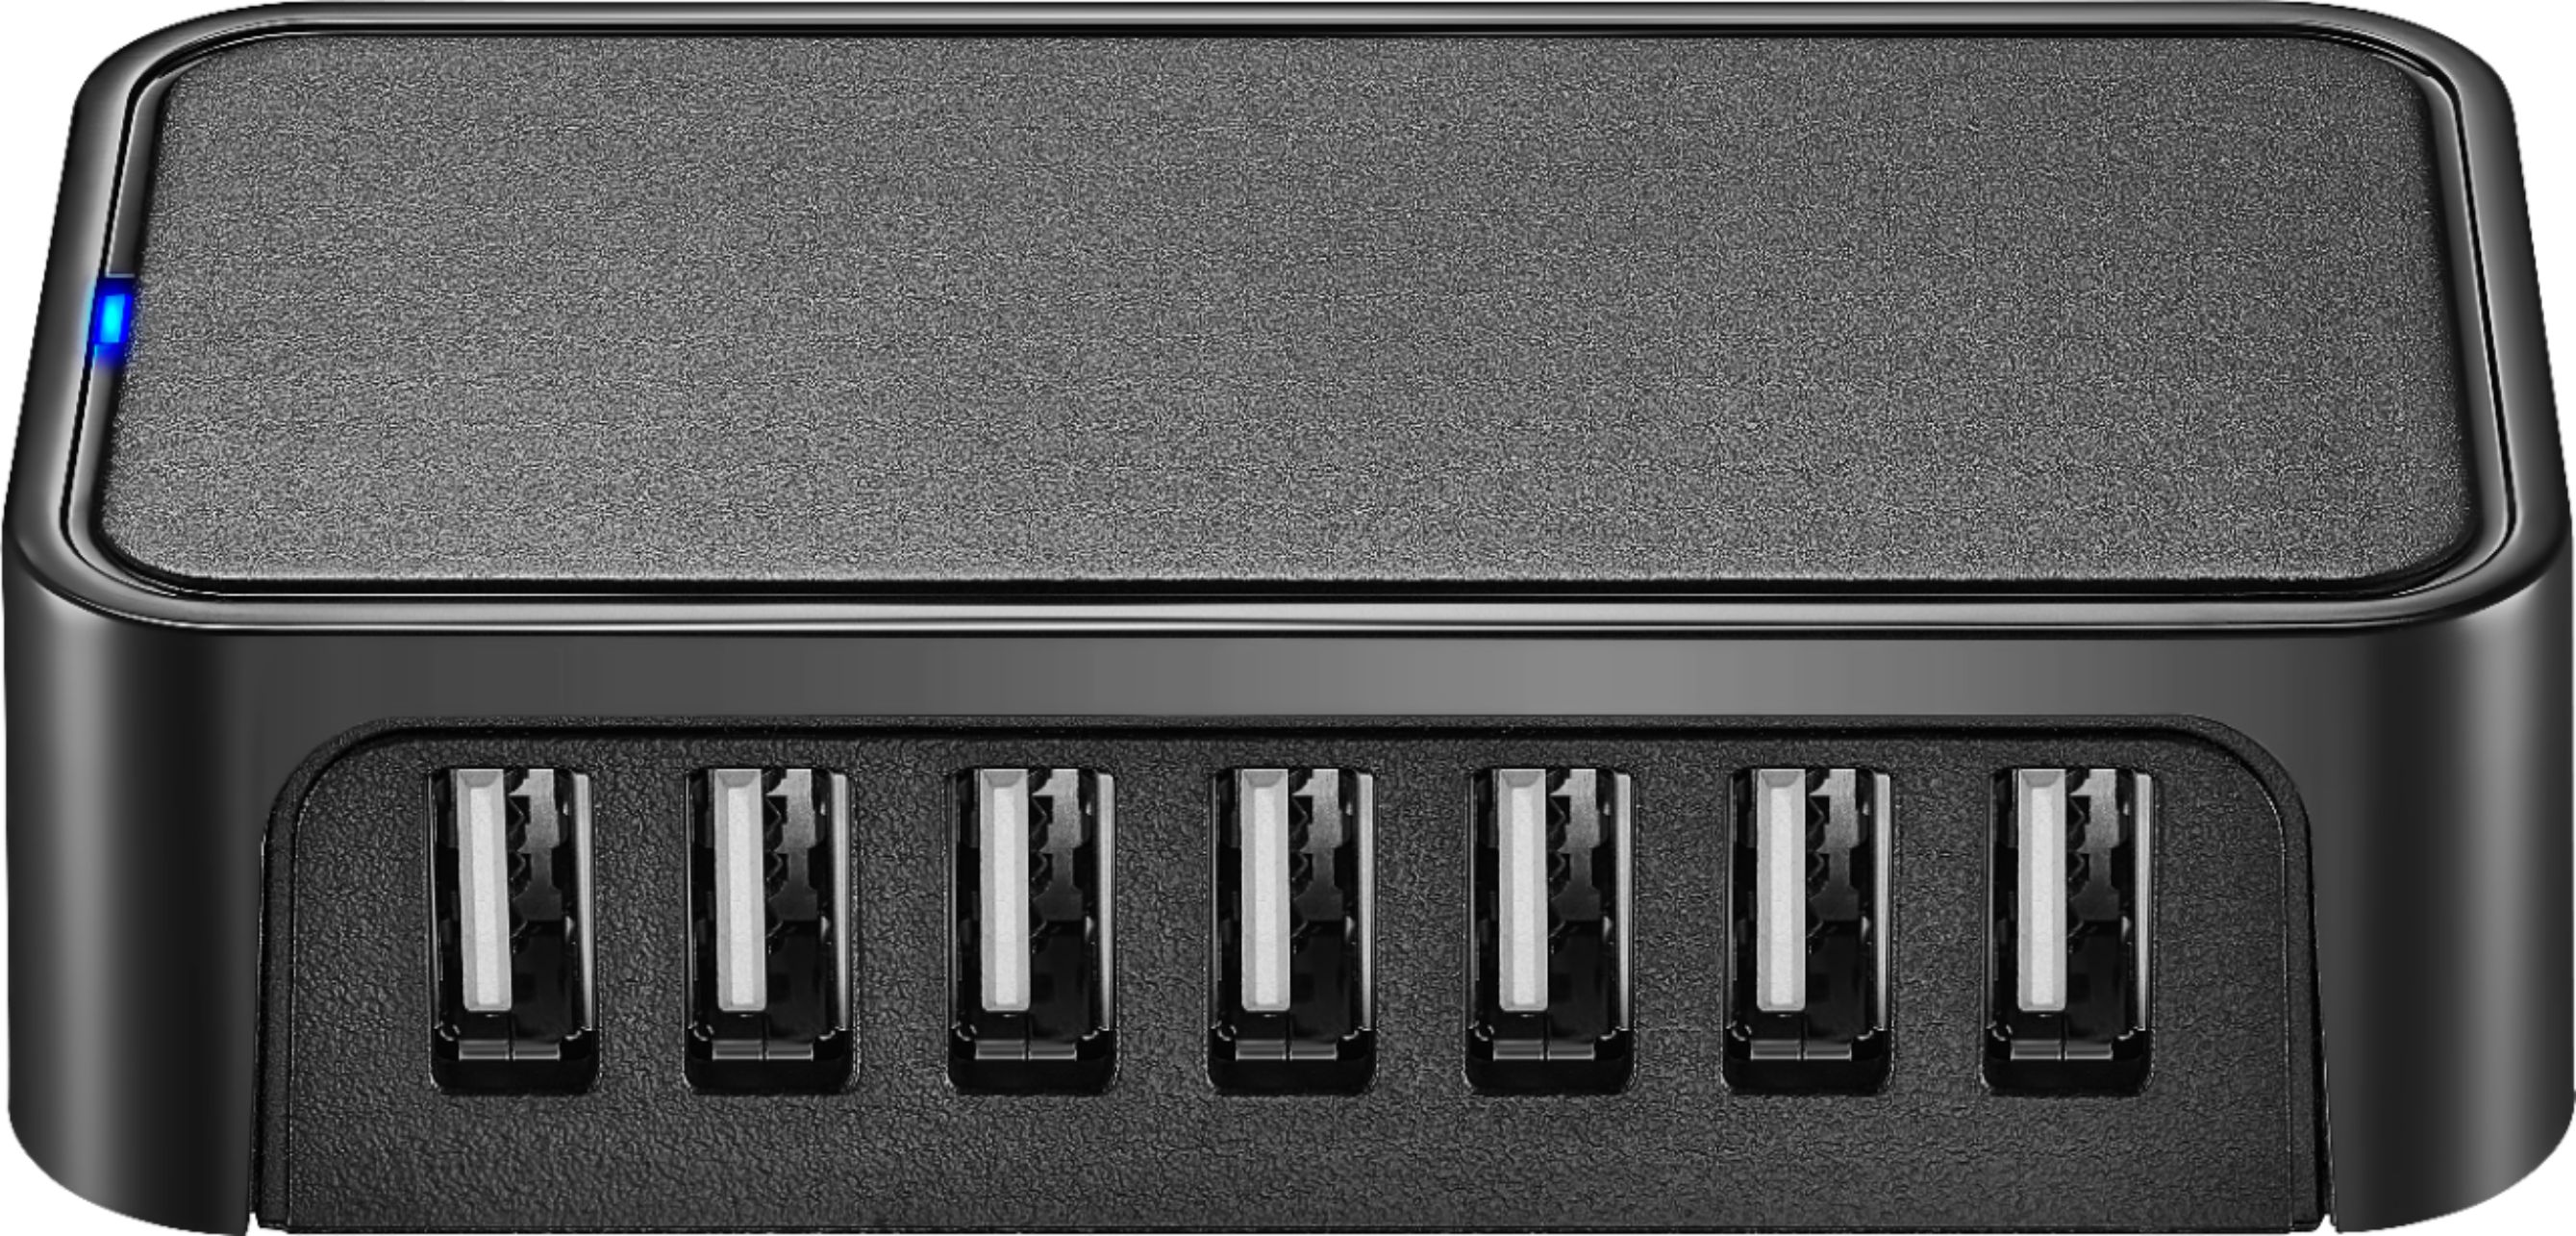 HUB 7 Puertos USB 2.0 Con Switch - Venprotech